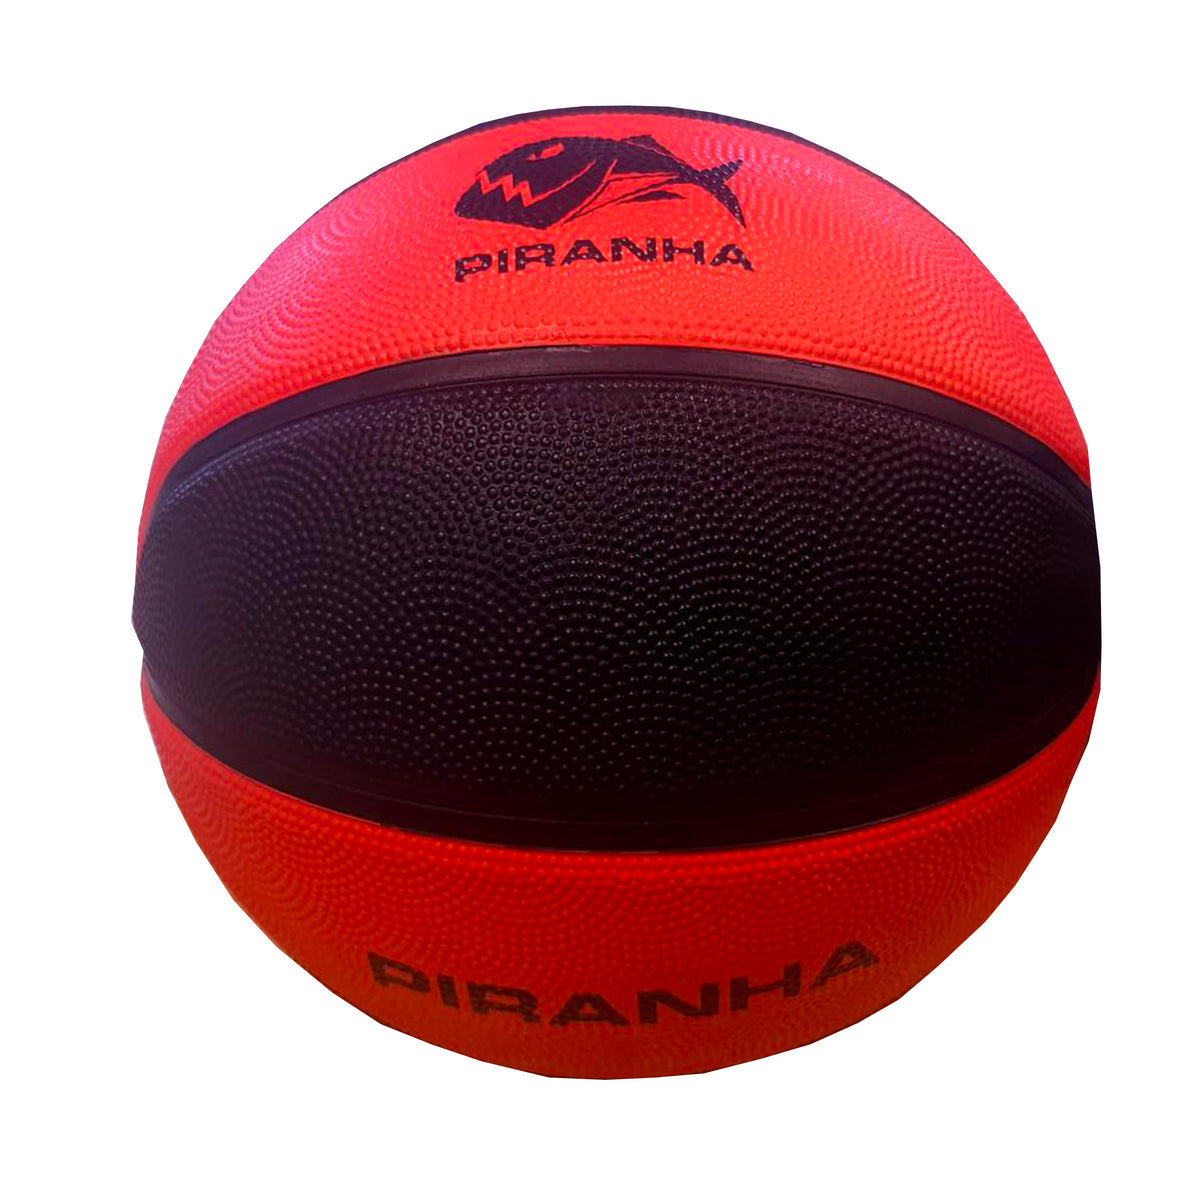 Piranha Basketball Team Black/Red - Size 7